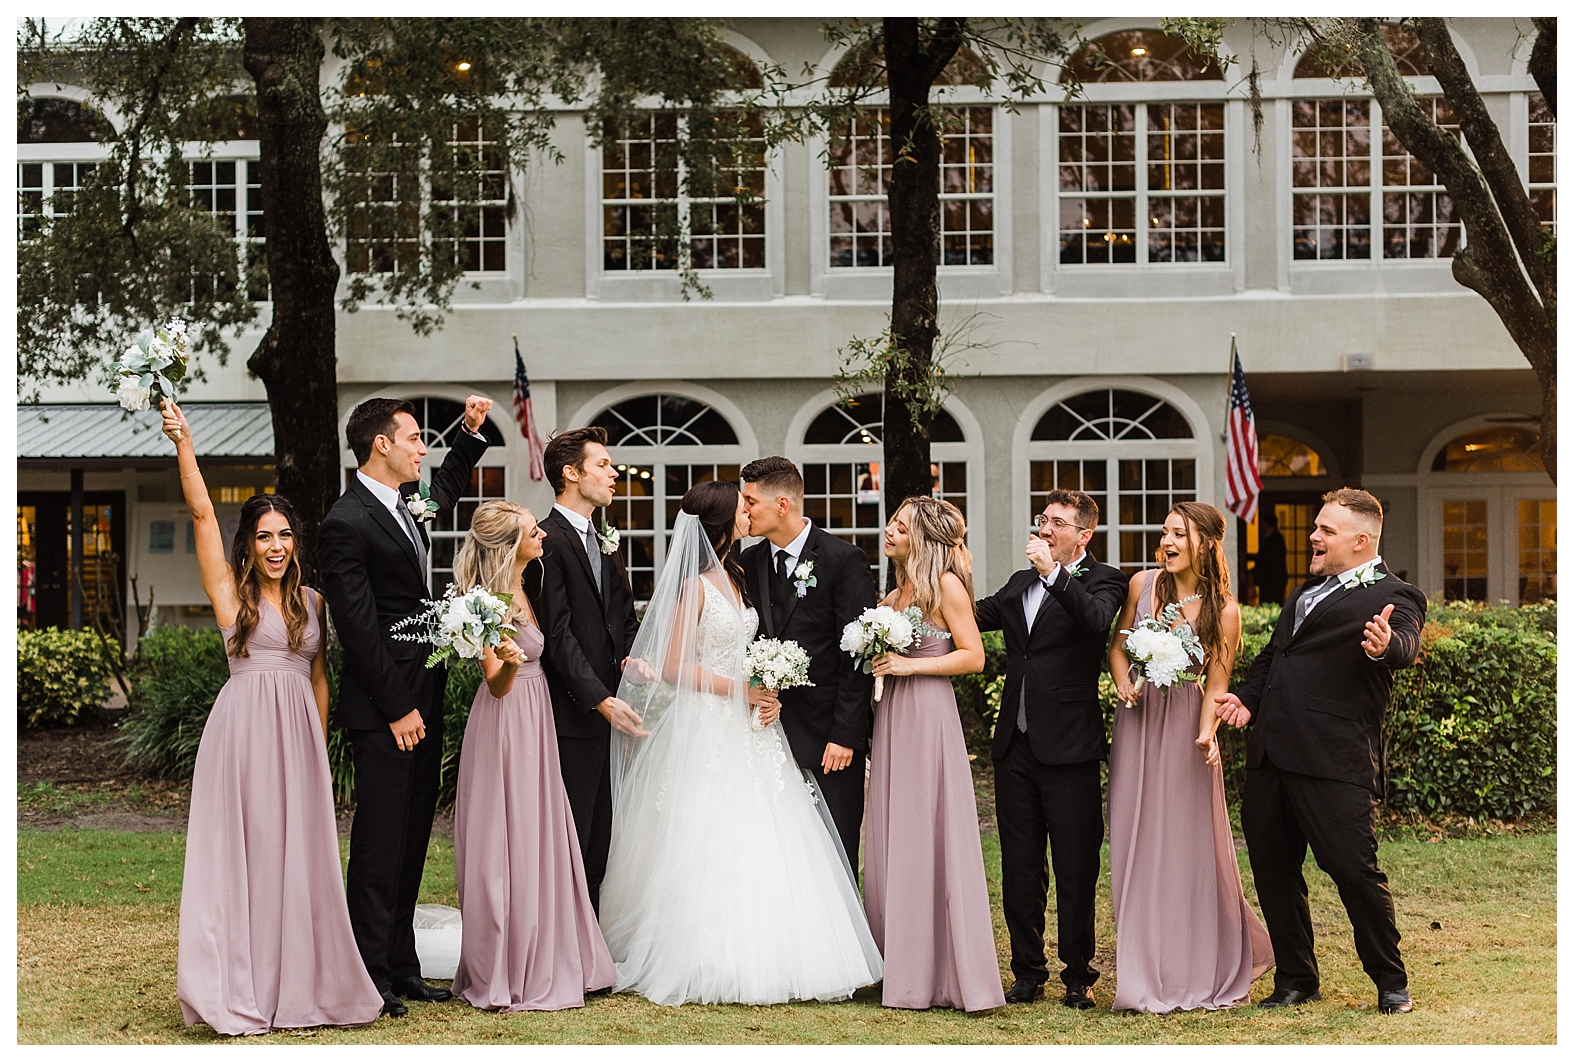 GlenLakes Country Club Wedding - J Canelas Photography